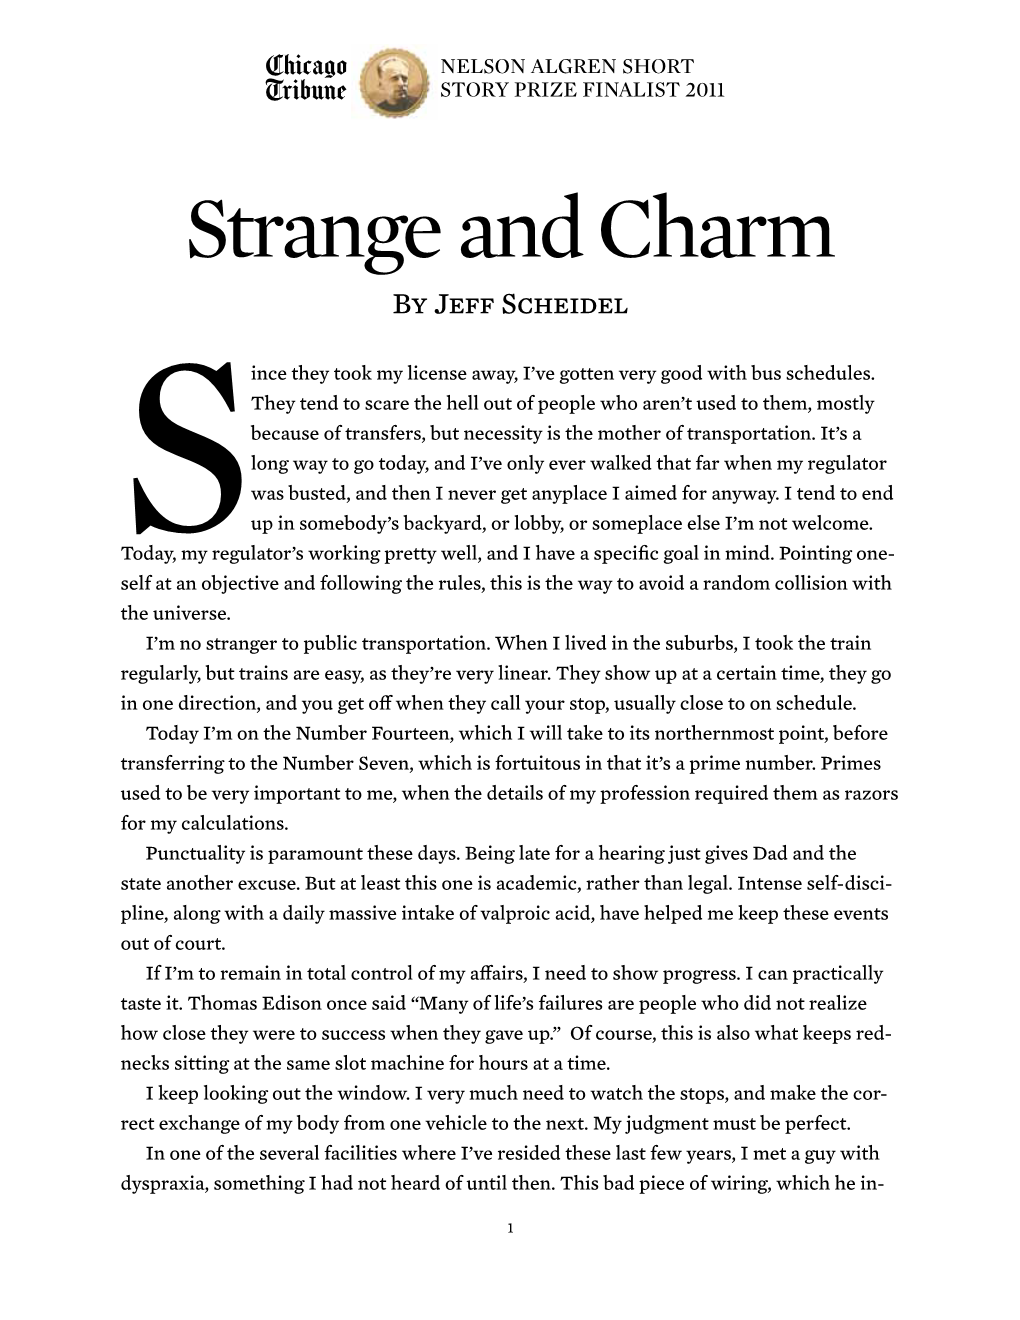 Strange and Charm by Jeff Scheidel